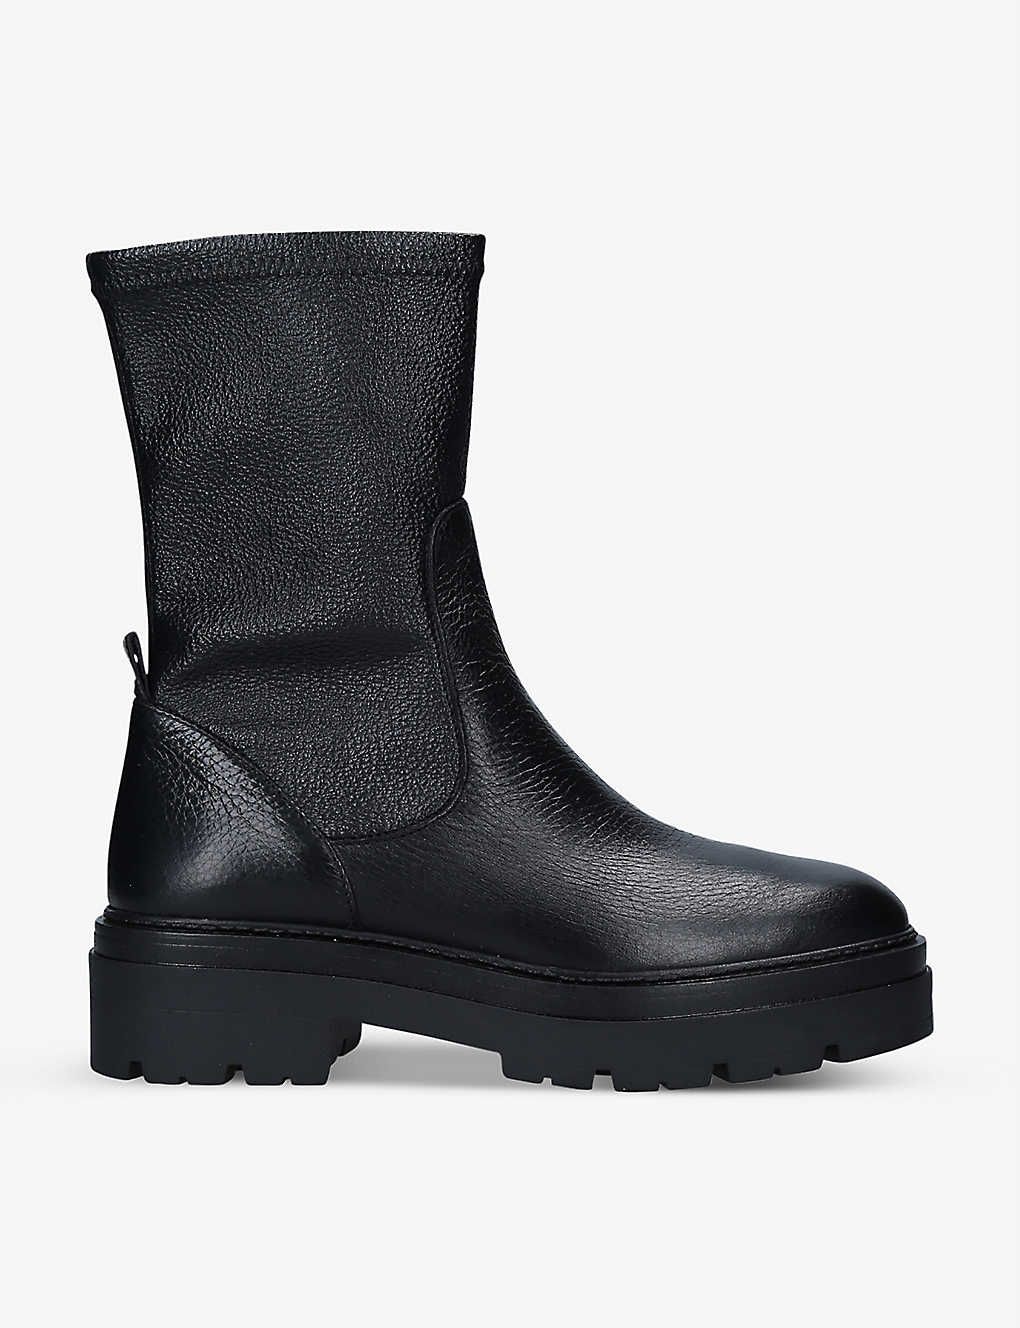 Sincere leather boots | Selfridges